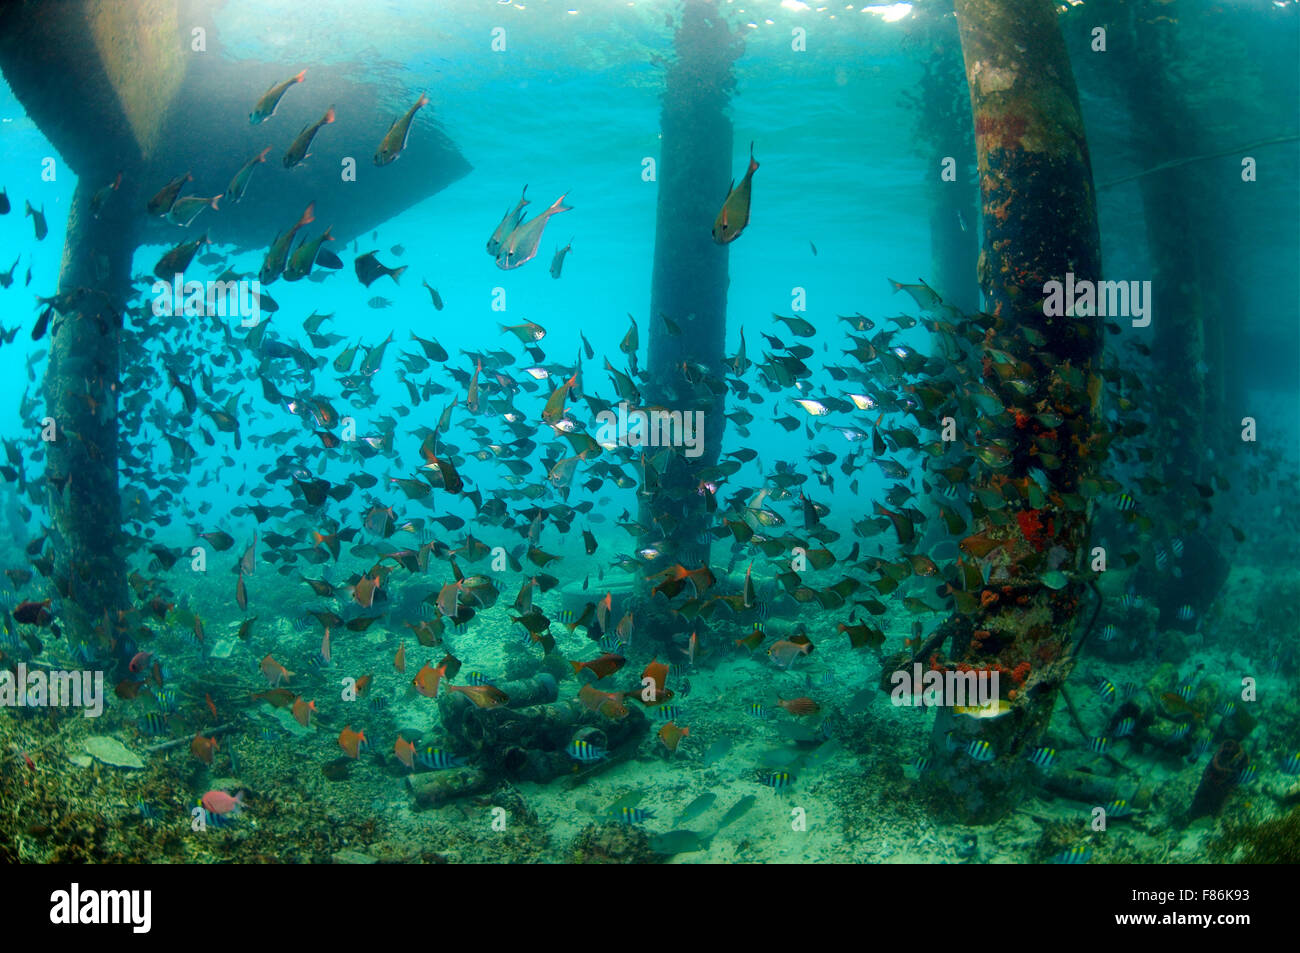 Escuela de peces tropicales, el Mar de China Meridional, Redang, Malasia, Asia Foto de stock